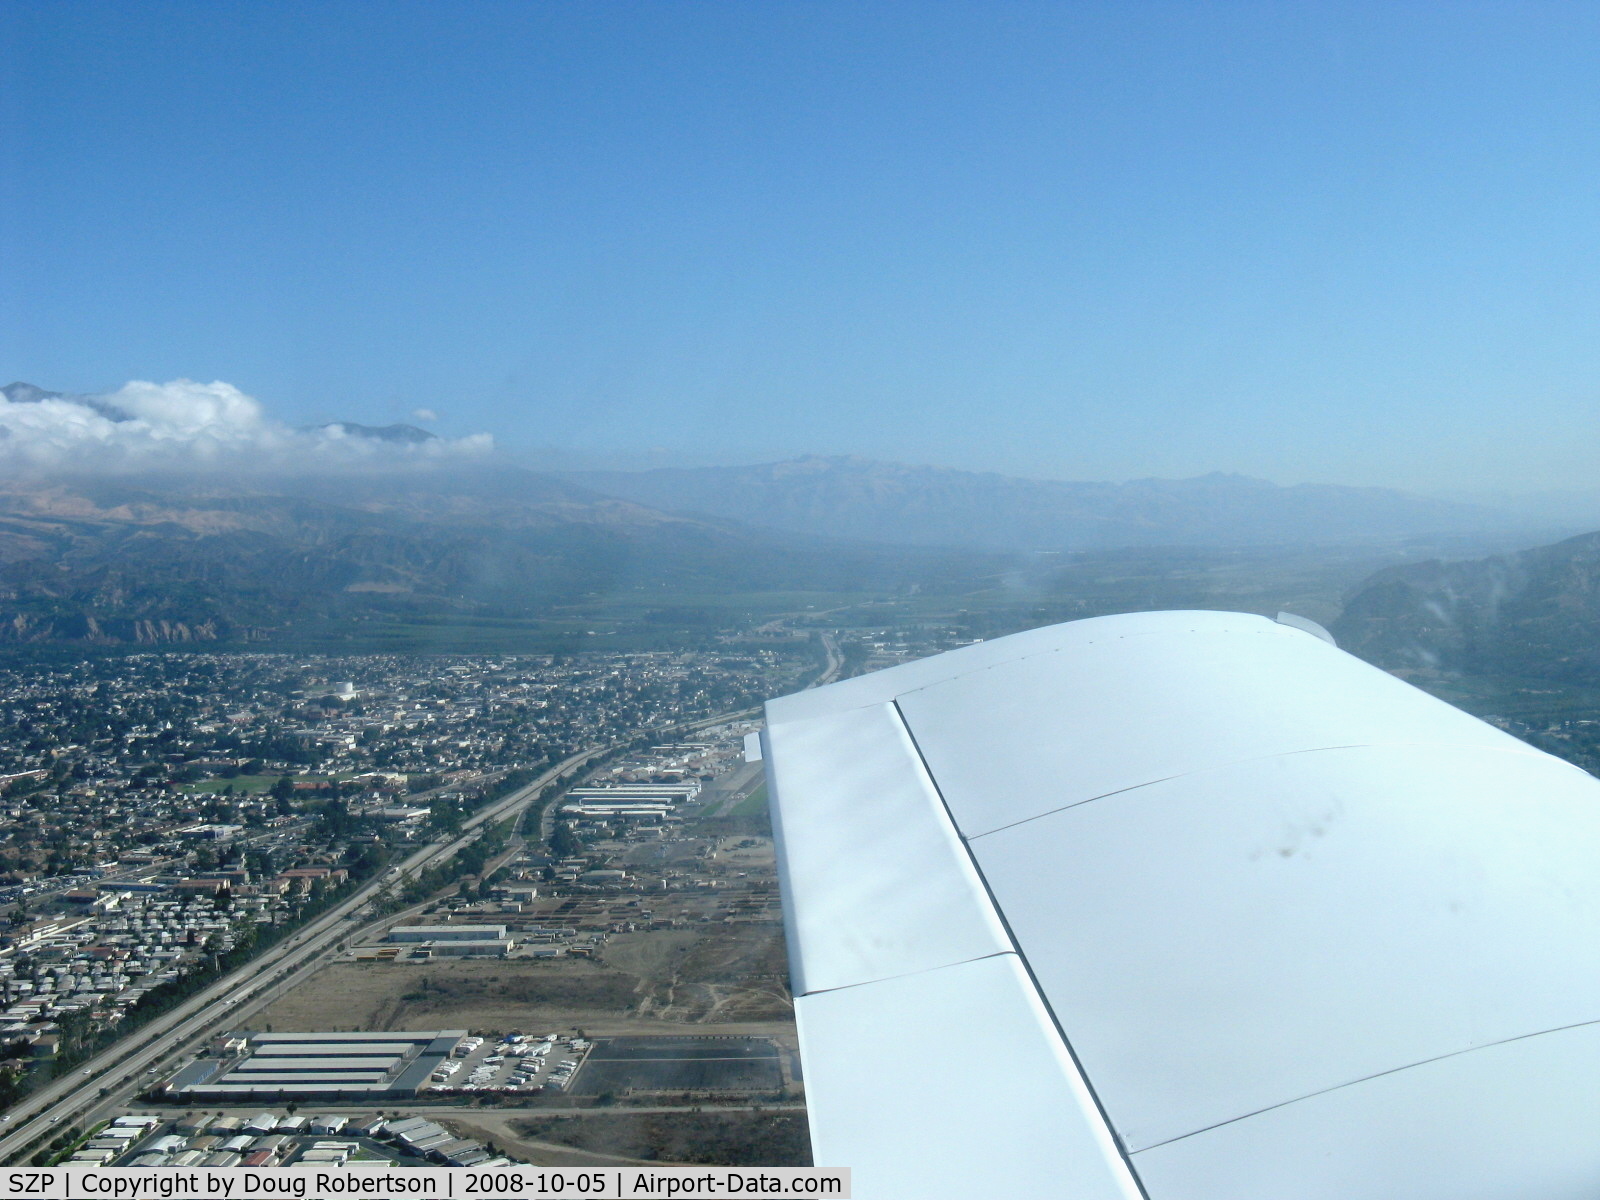 Santa Paula Airport (SZP) - Standard Crosswind Entry to Landing Pattern for Runway 22-N9YZ